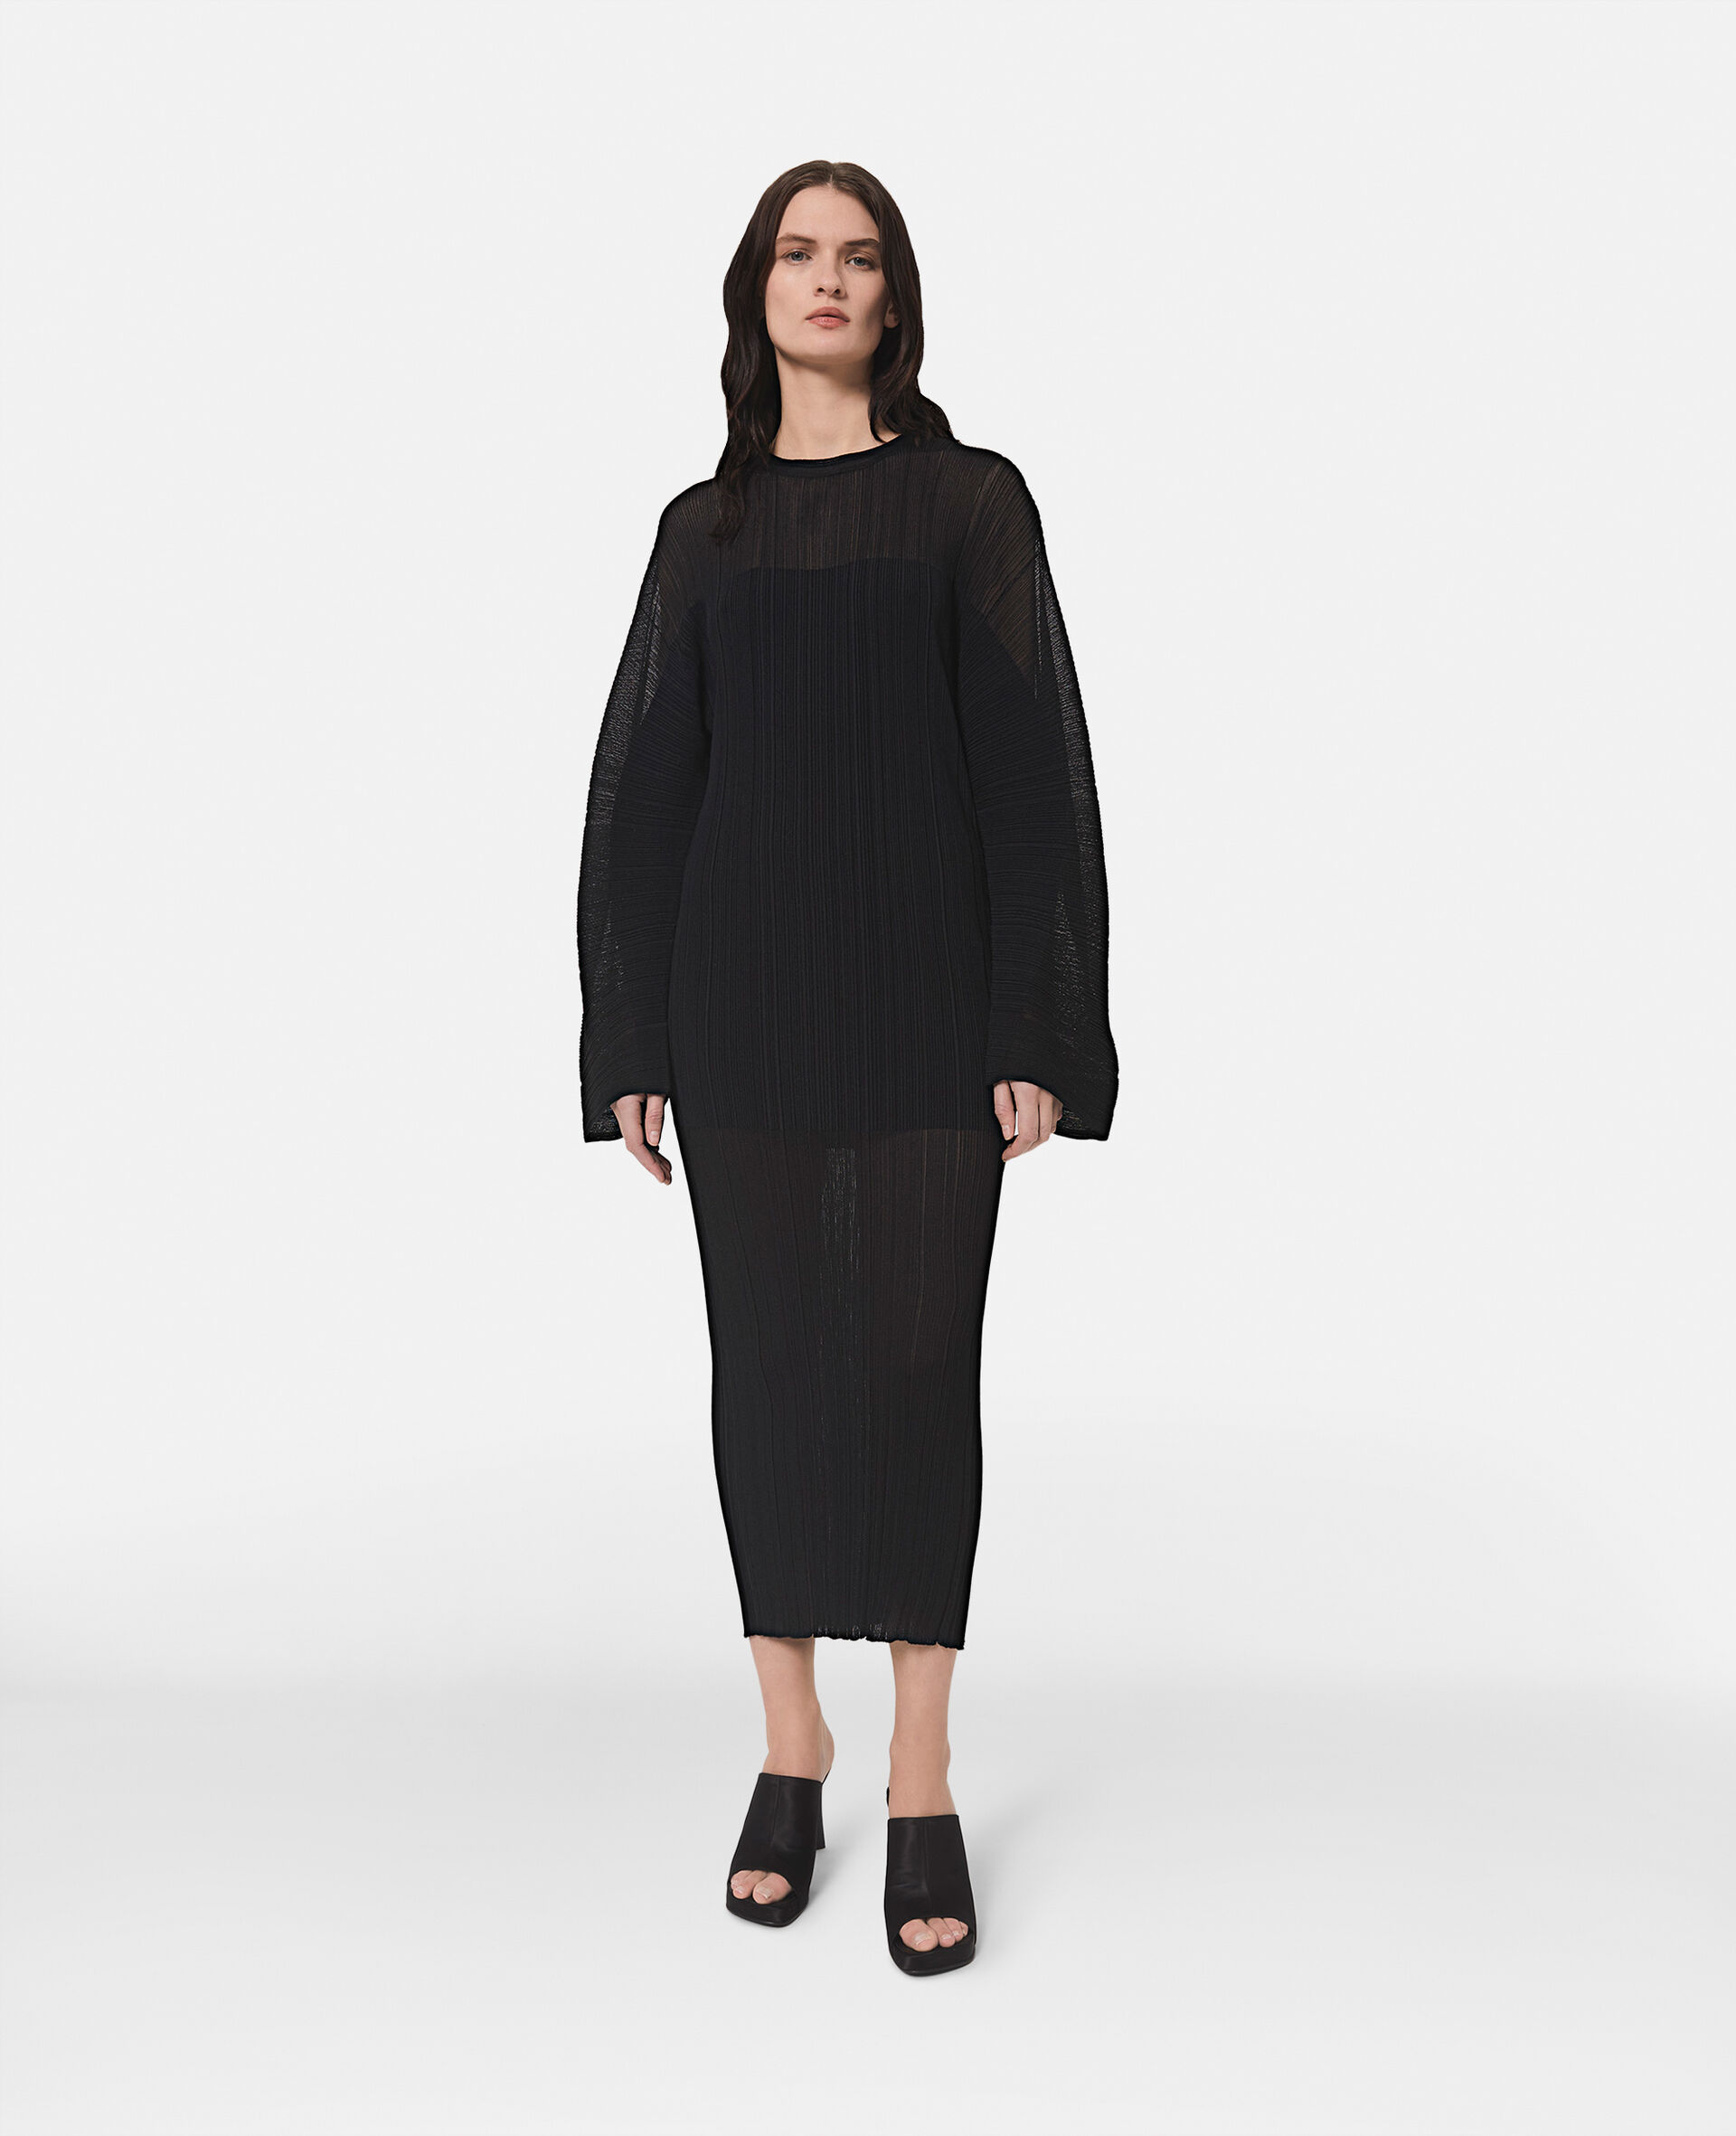 Banana Sleeve Plisse Pleat Knit Dress-Black-large image number 0